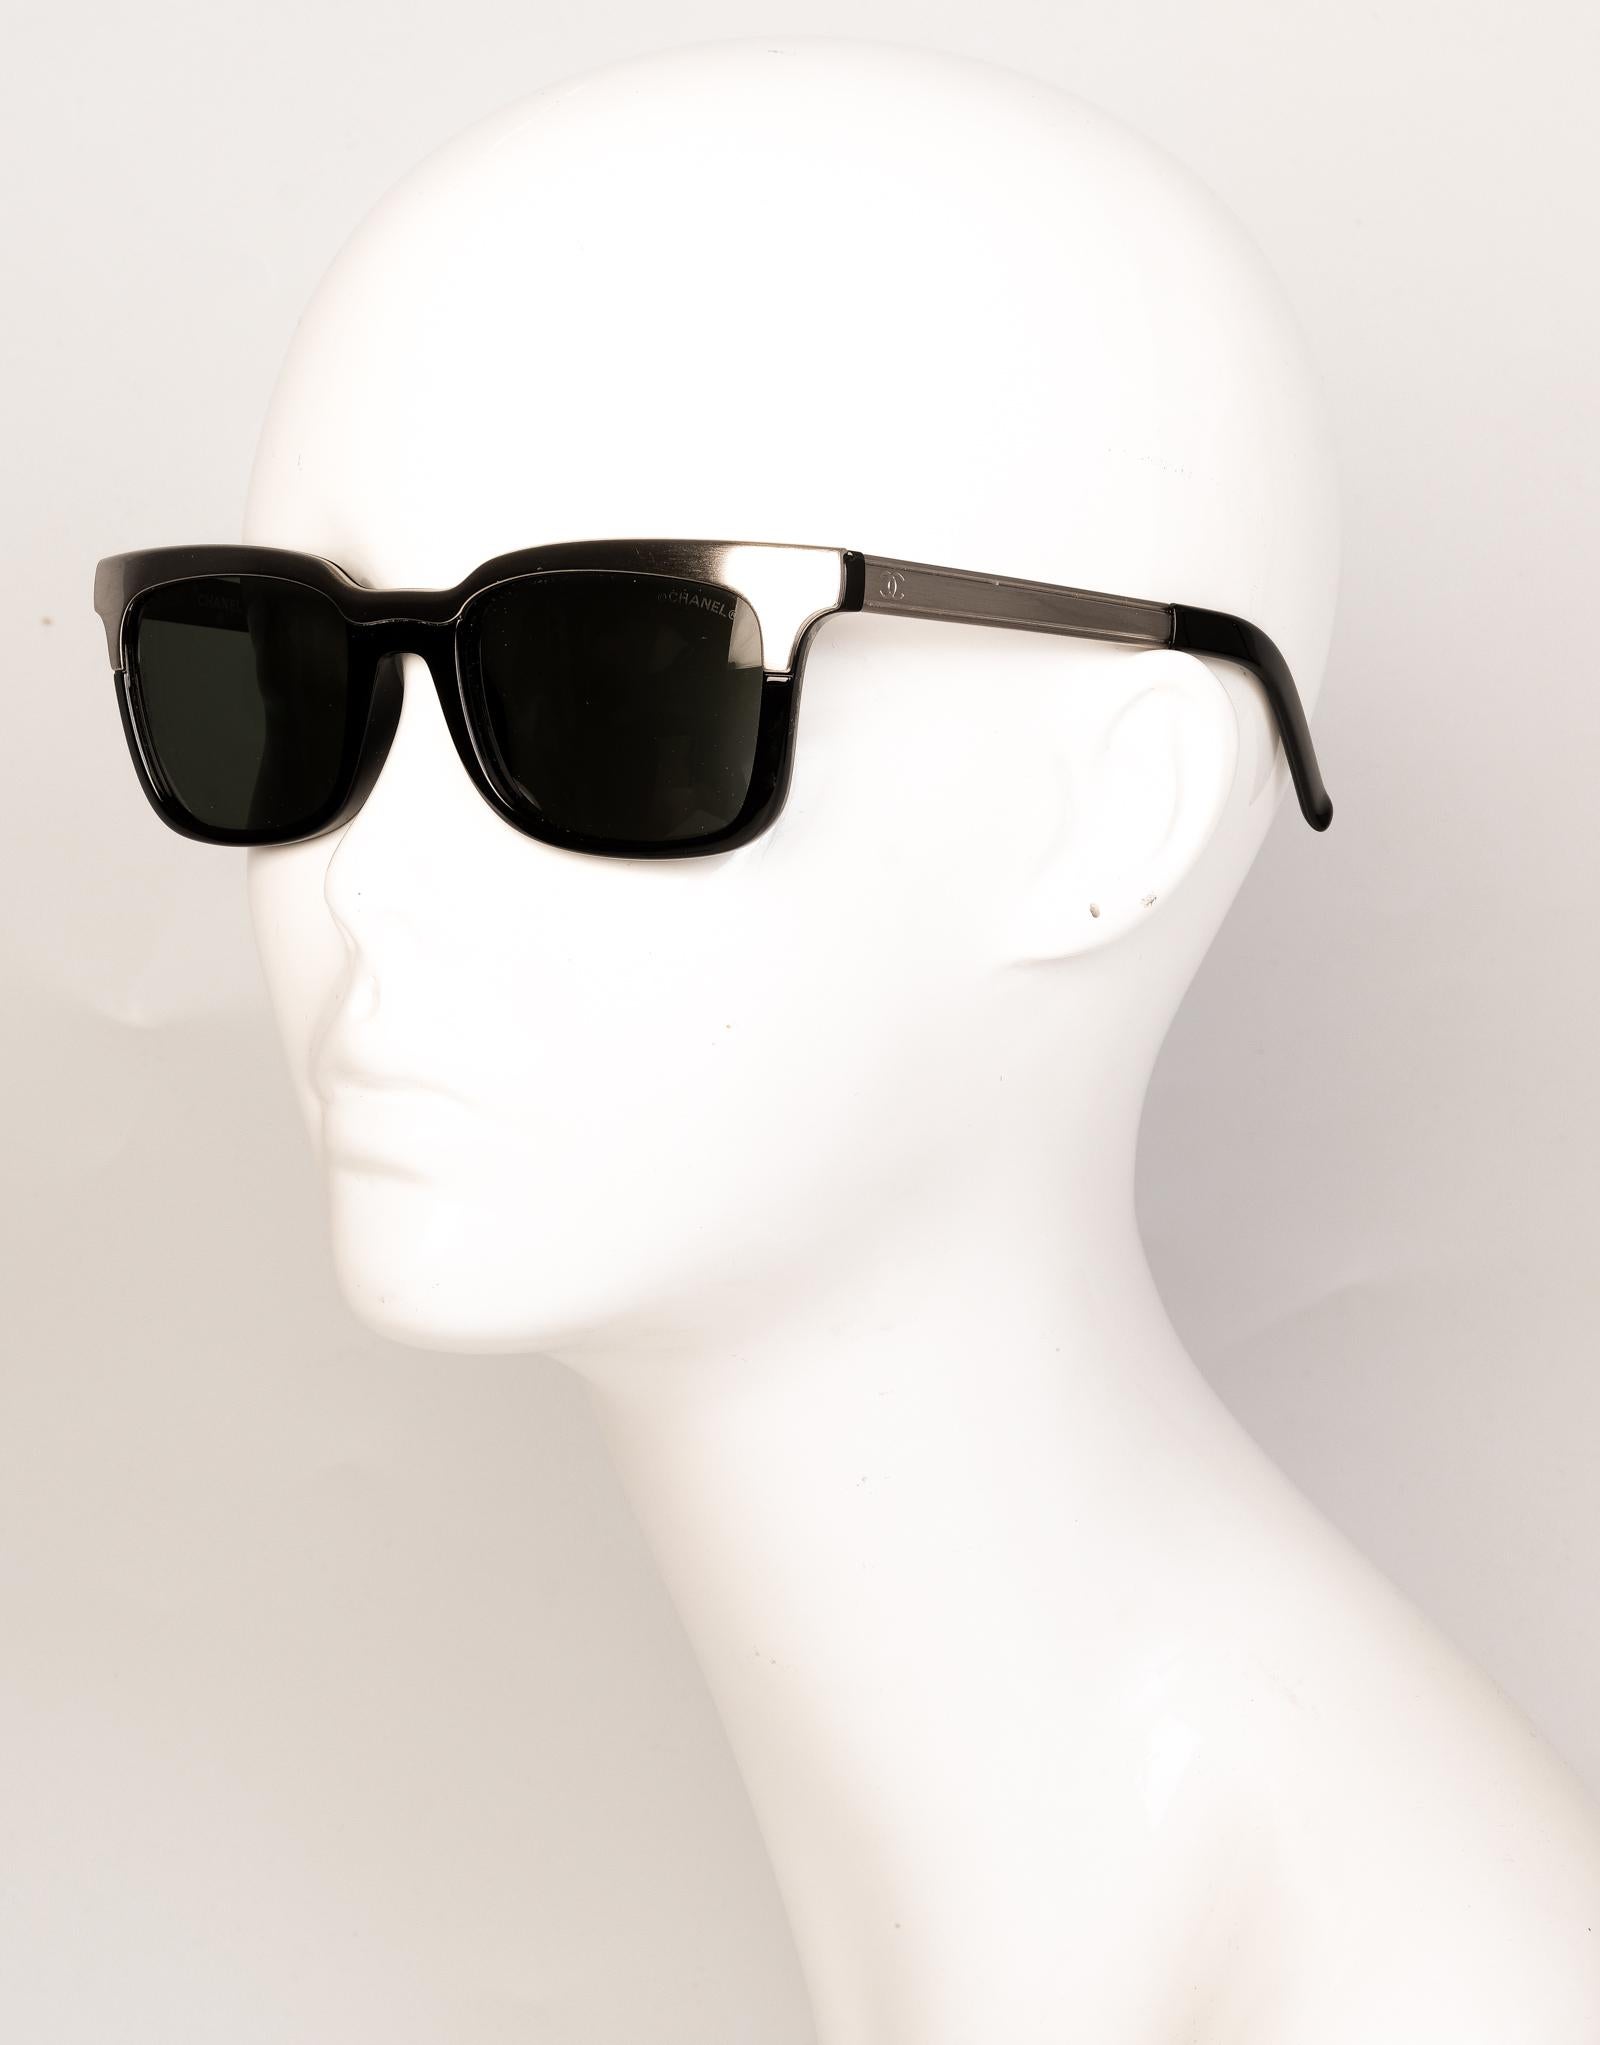 Chanel Black and Sliver Sunglasses 2